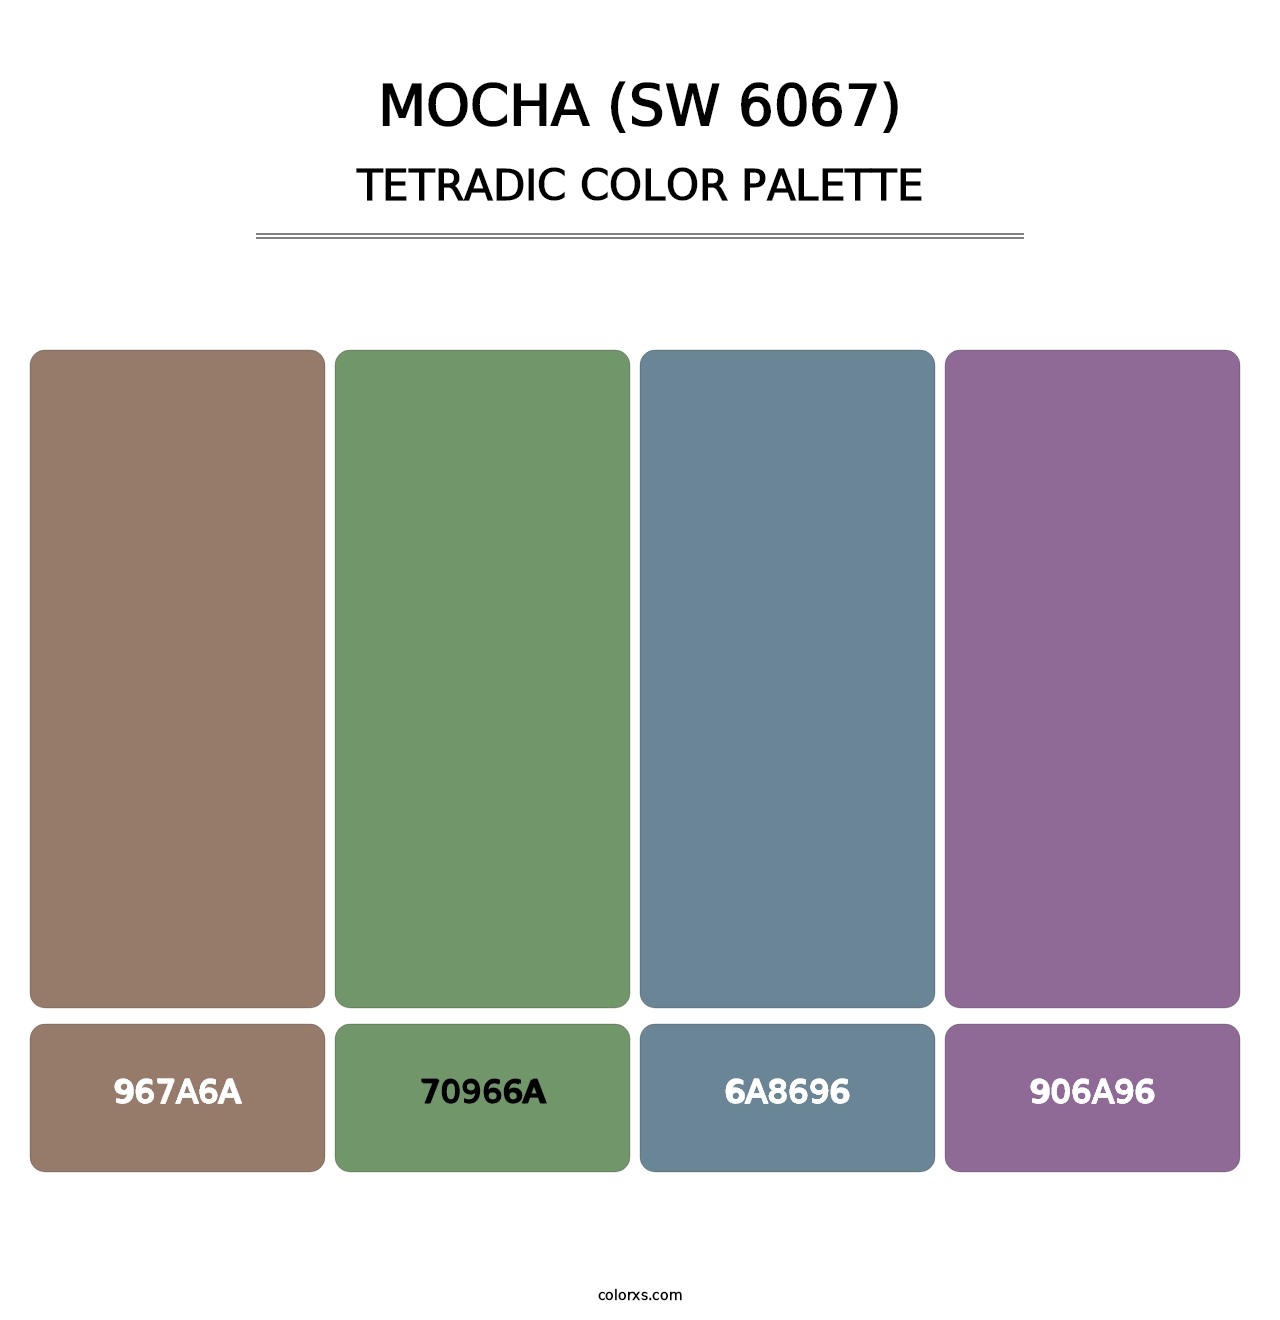 Mocha (SW 6067) - Tetradic Color Palette